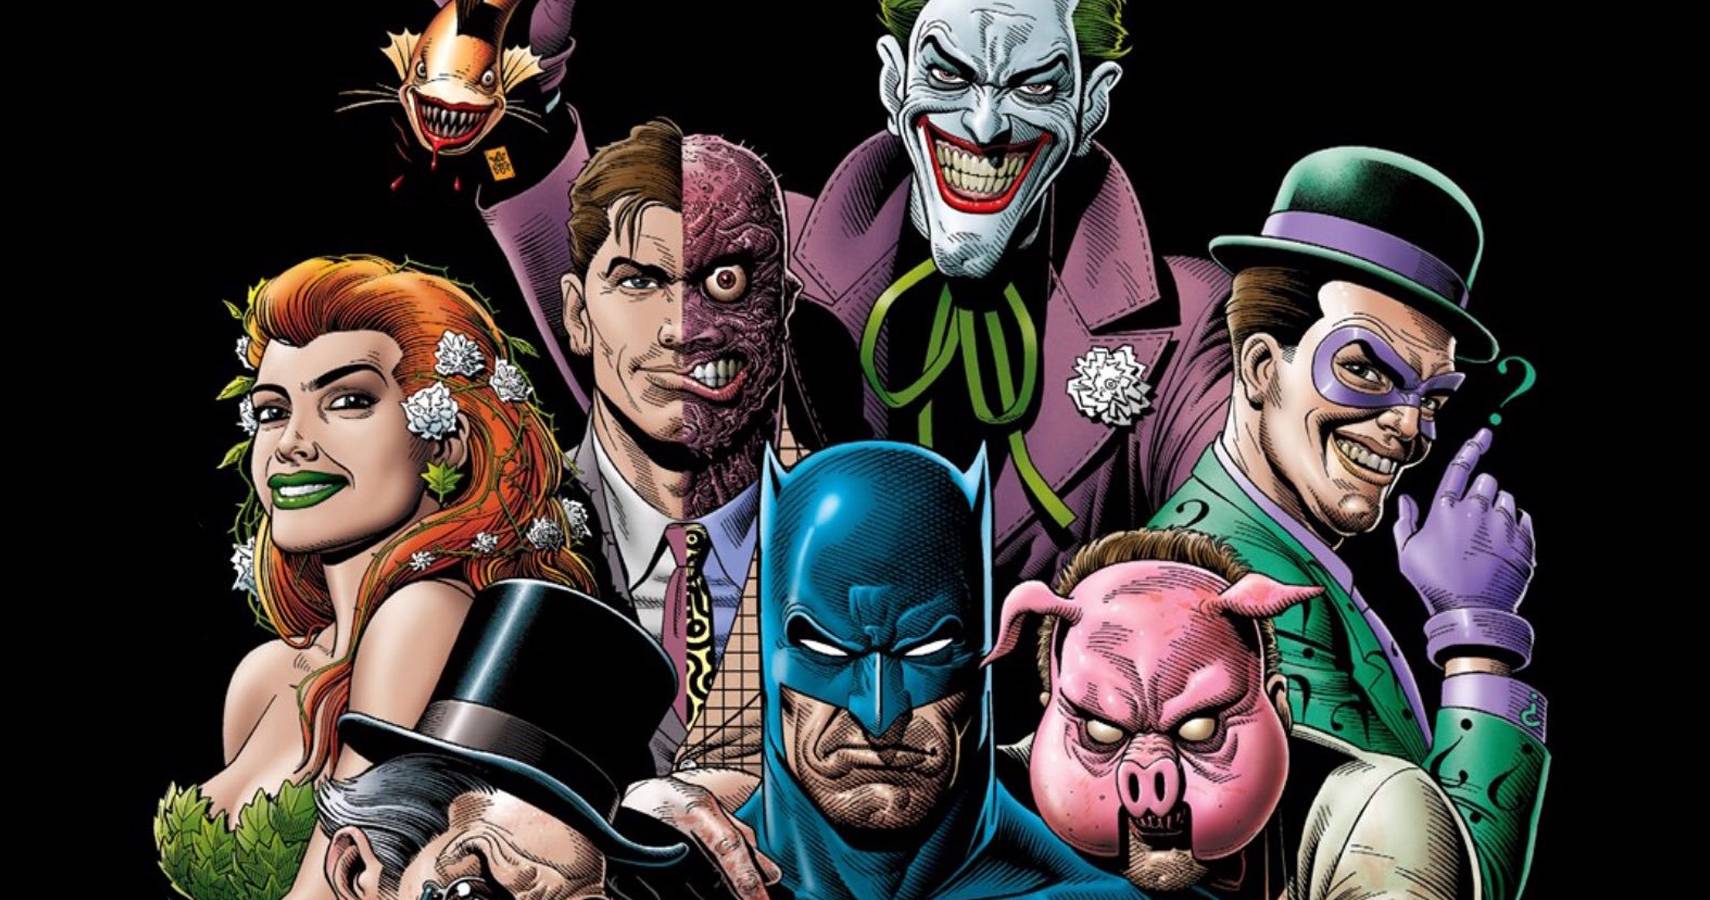 Gotham city villains